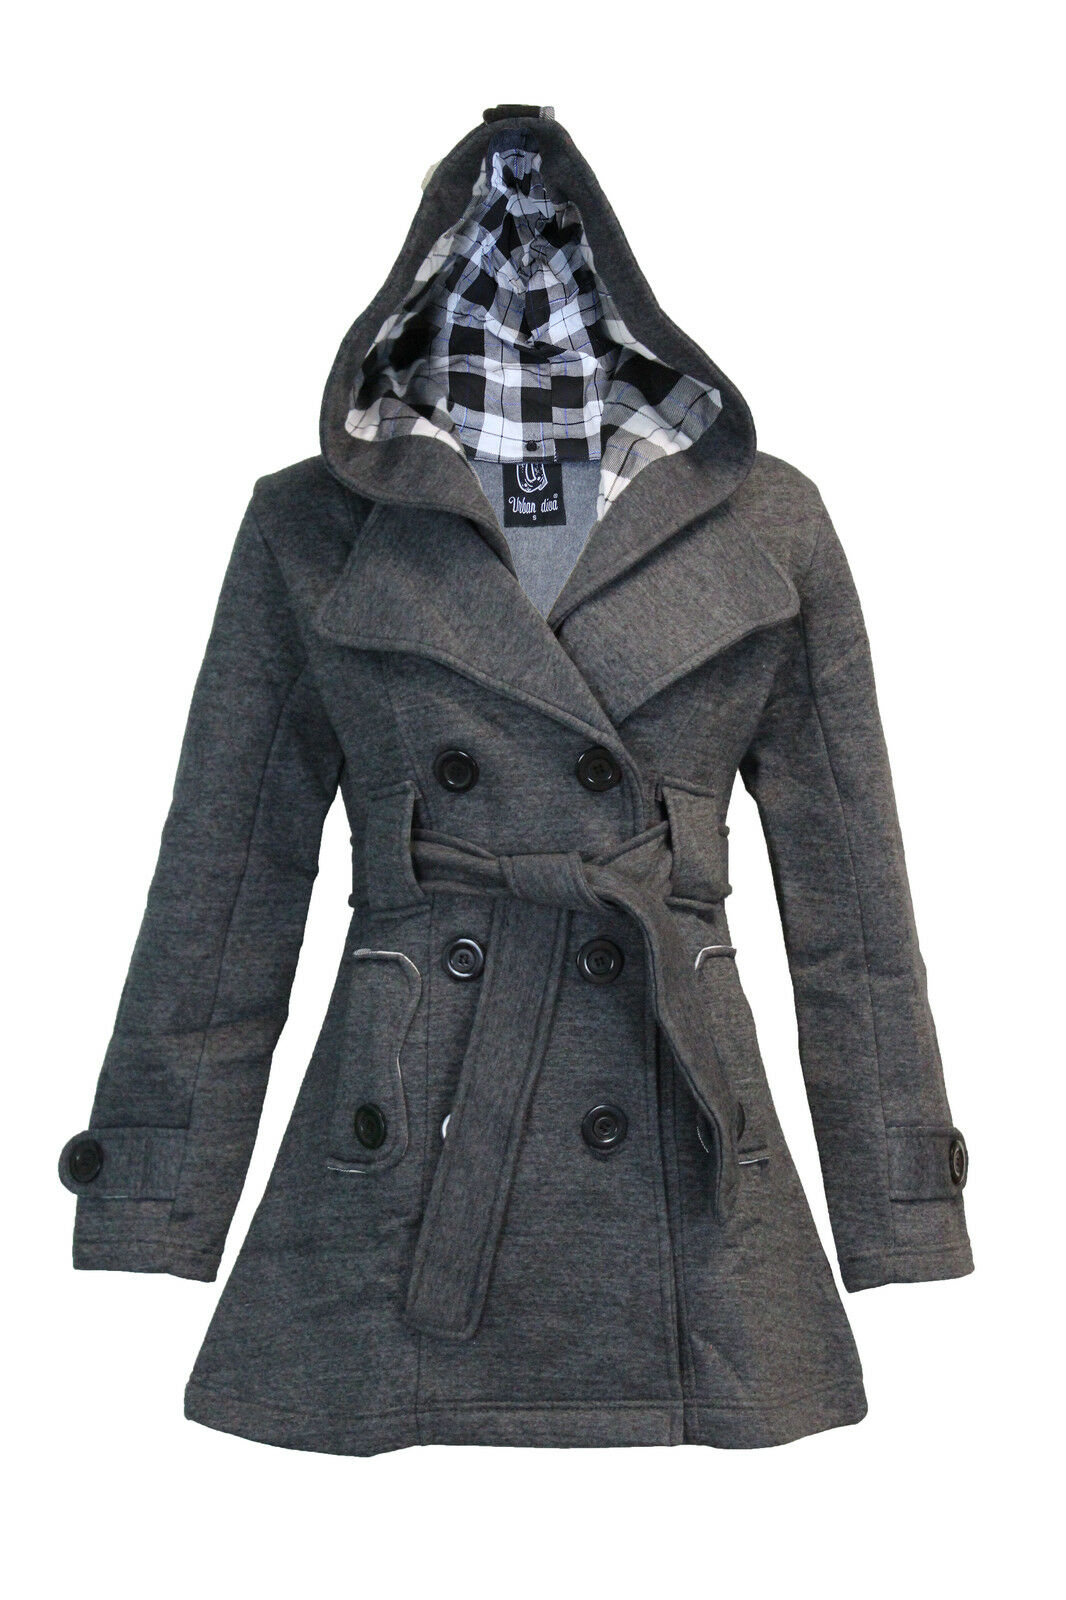 Ladies Charcoal Grey Hooded Fleece Trench Coat.